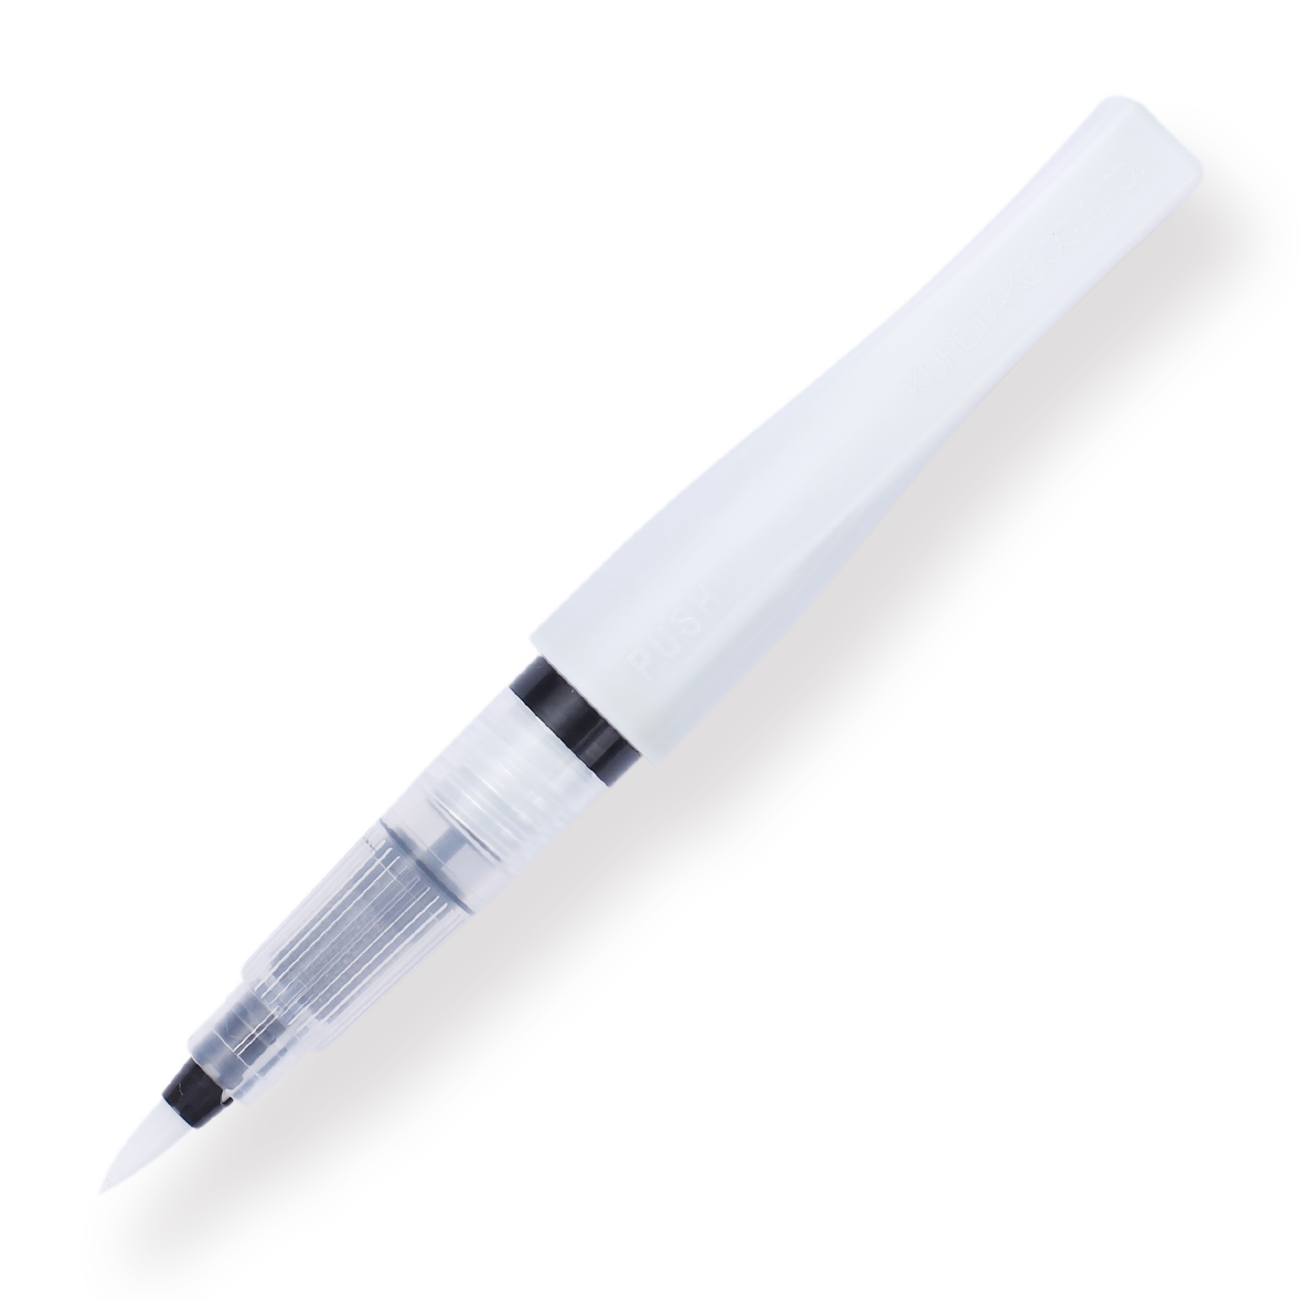 Kuretake ZIG Wink of Luna Brush Pen - Silver - 102 - Stationery Pal